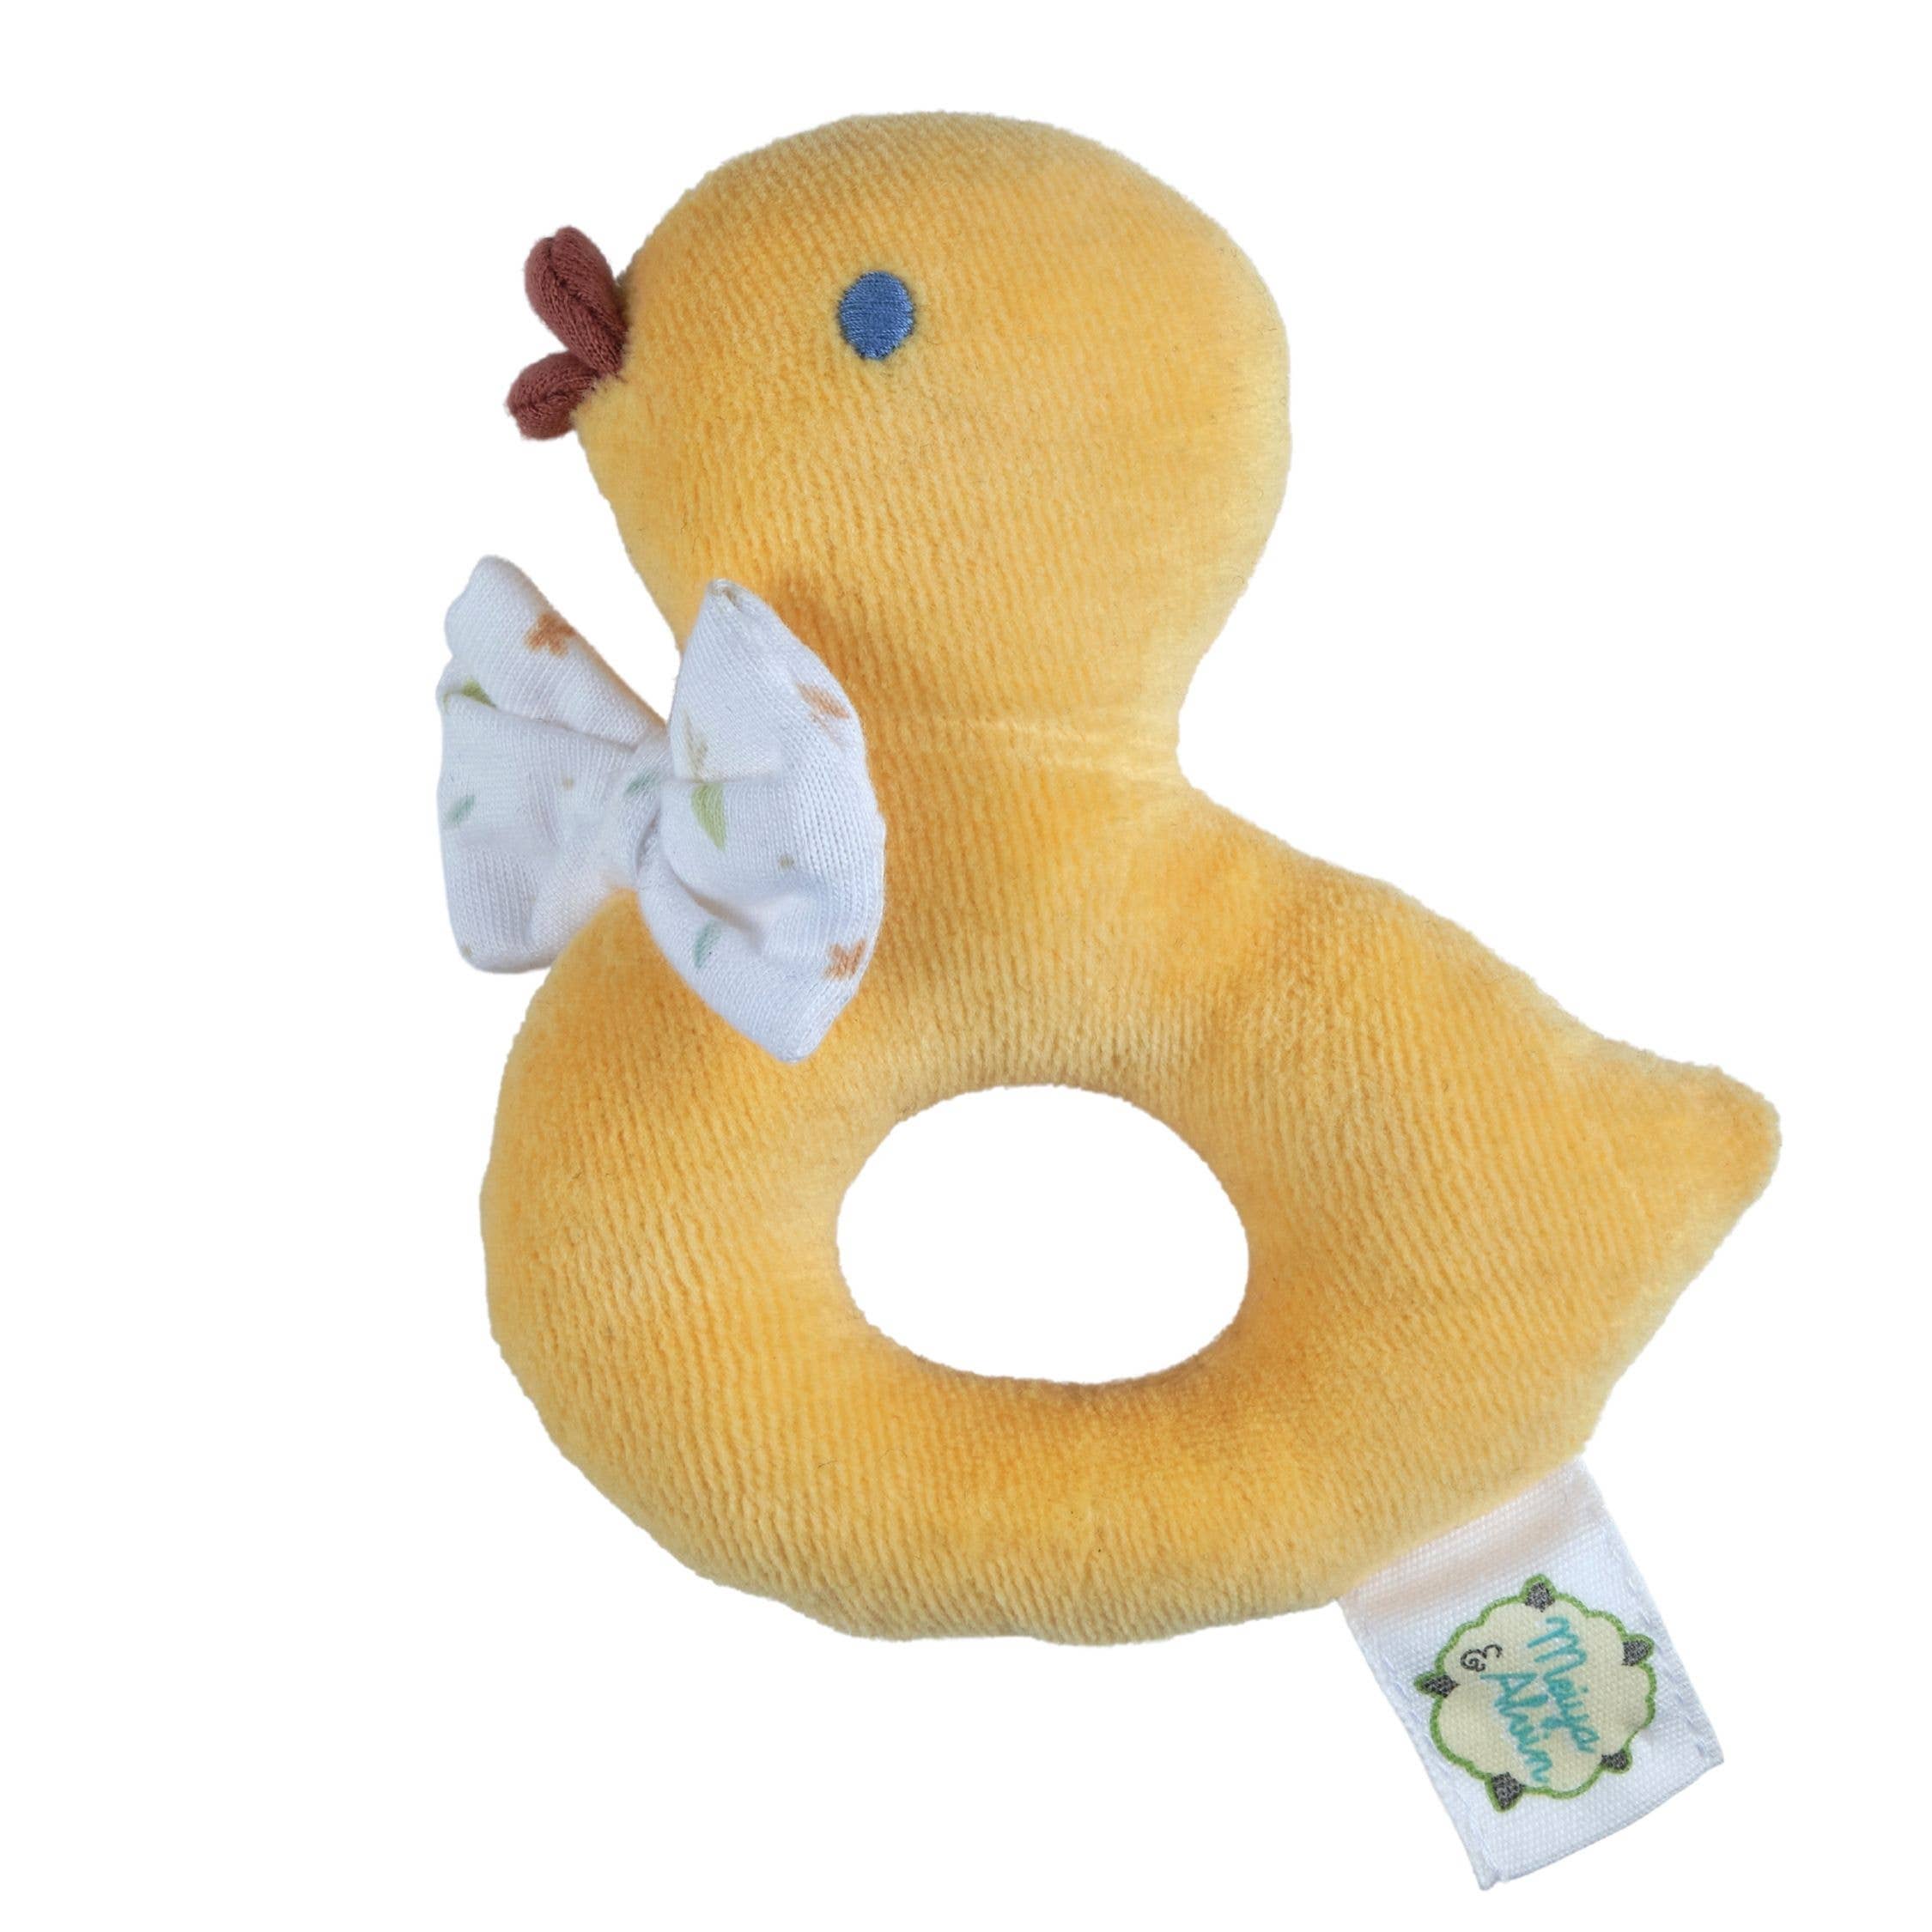 Tikiri Toys - Tara the Duck Organic Fabric Rattle